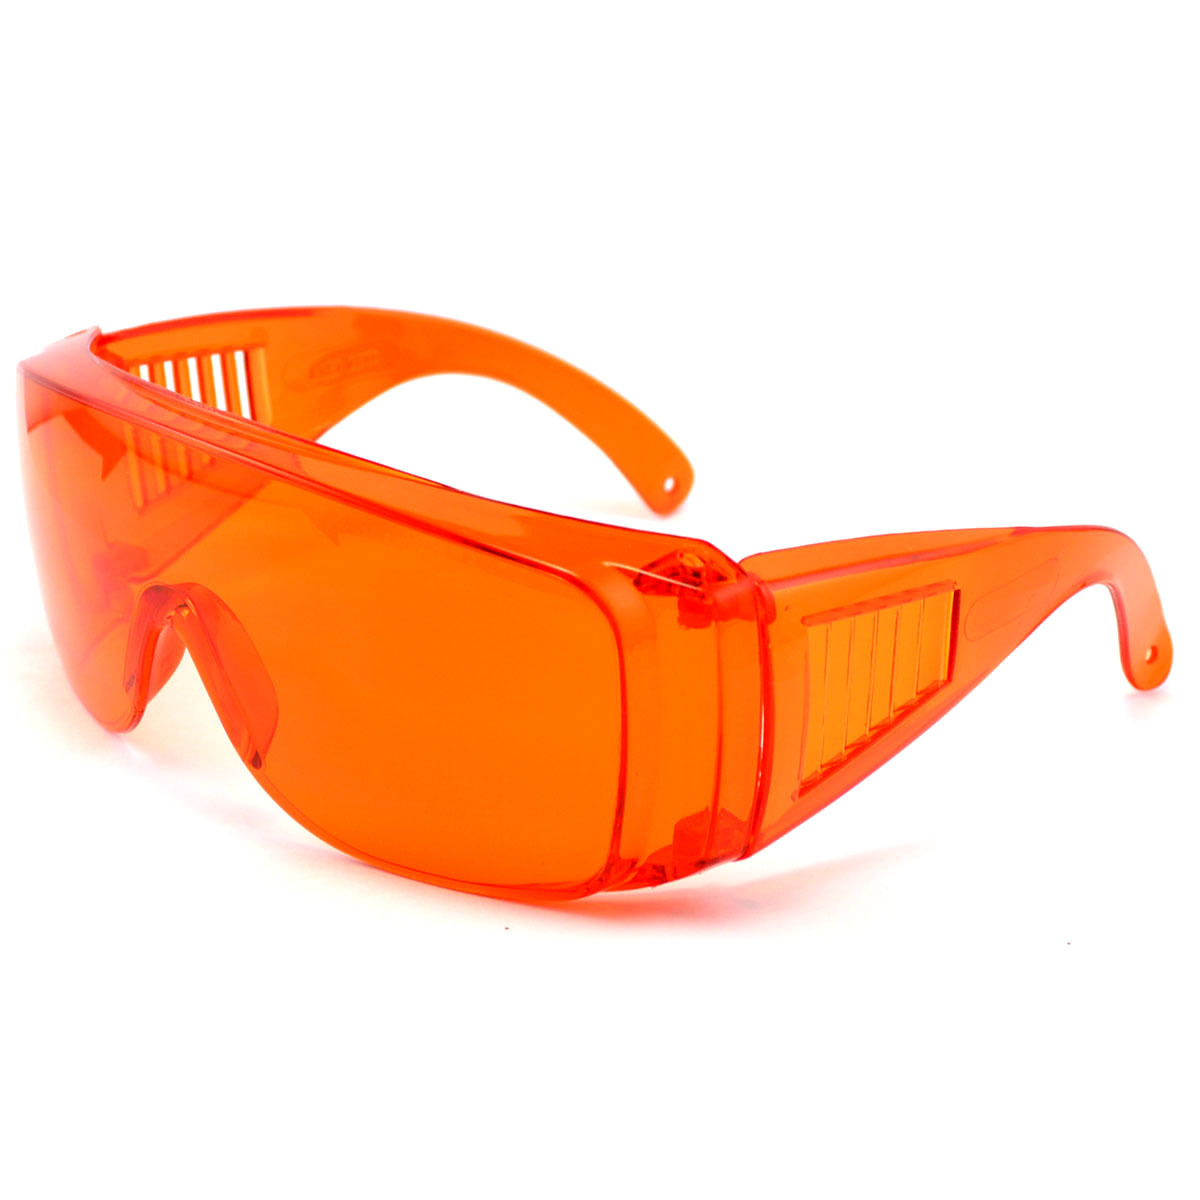 445nm-Blue-violet-Laser-Protective-Goggles-OD4-200-540nm-Eye-Protection-Safety-Glasses-Orange-1382708